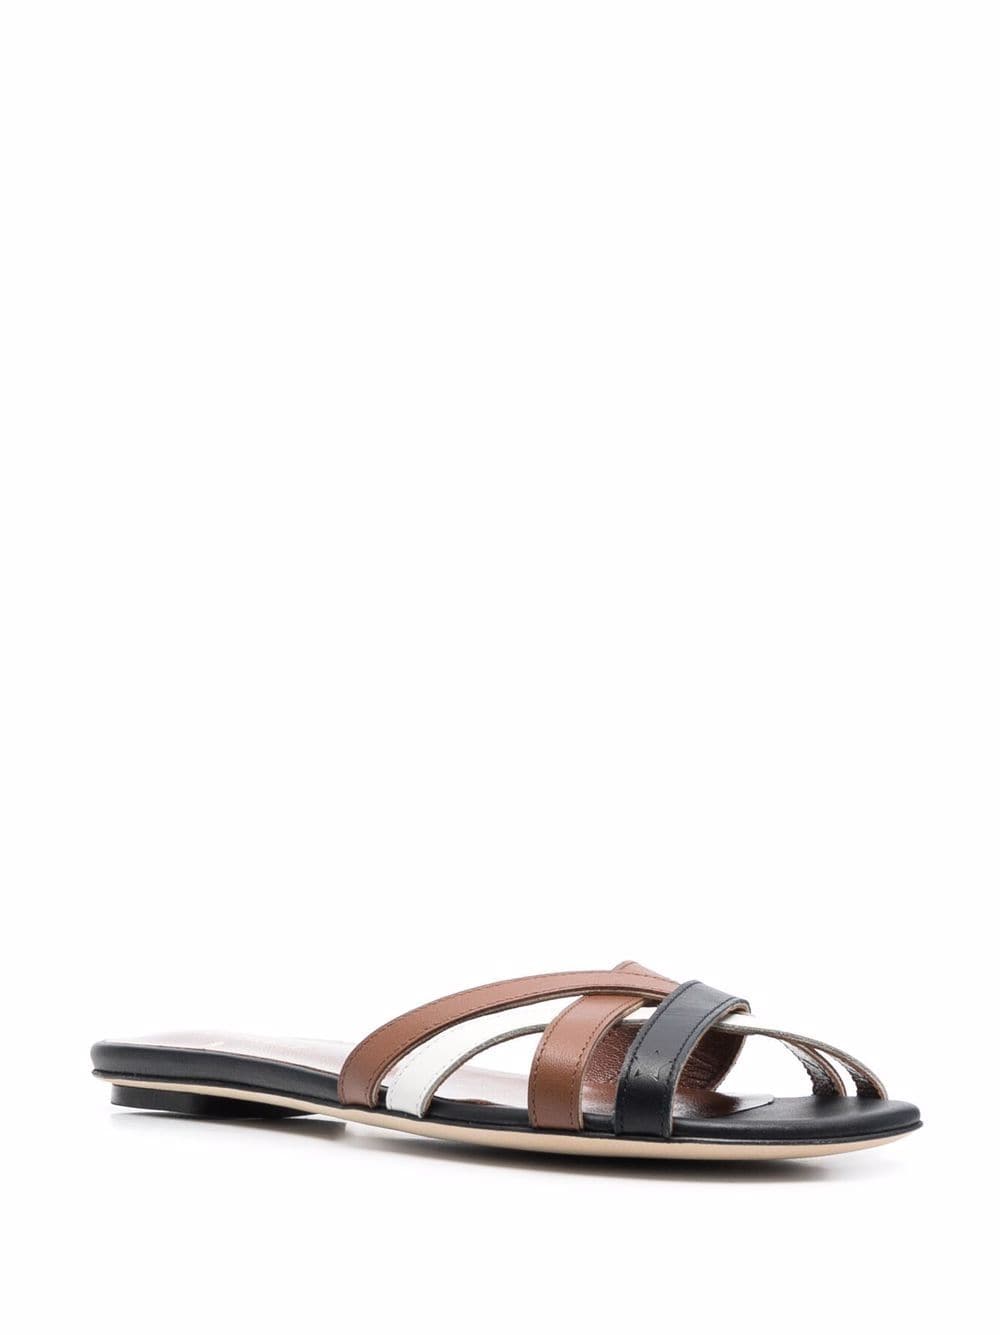 Image 2 of Lorena Antoniazzi open-toe leather sandals